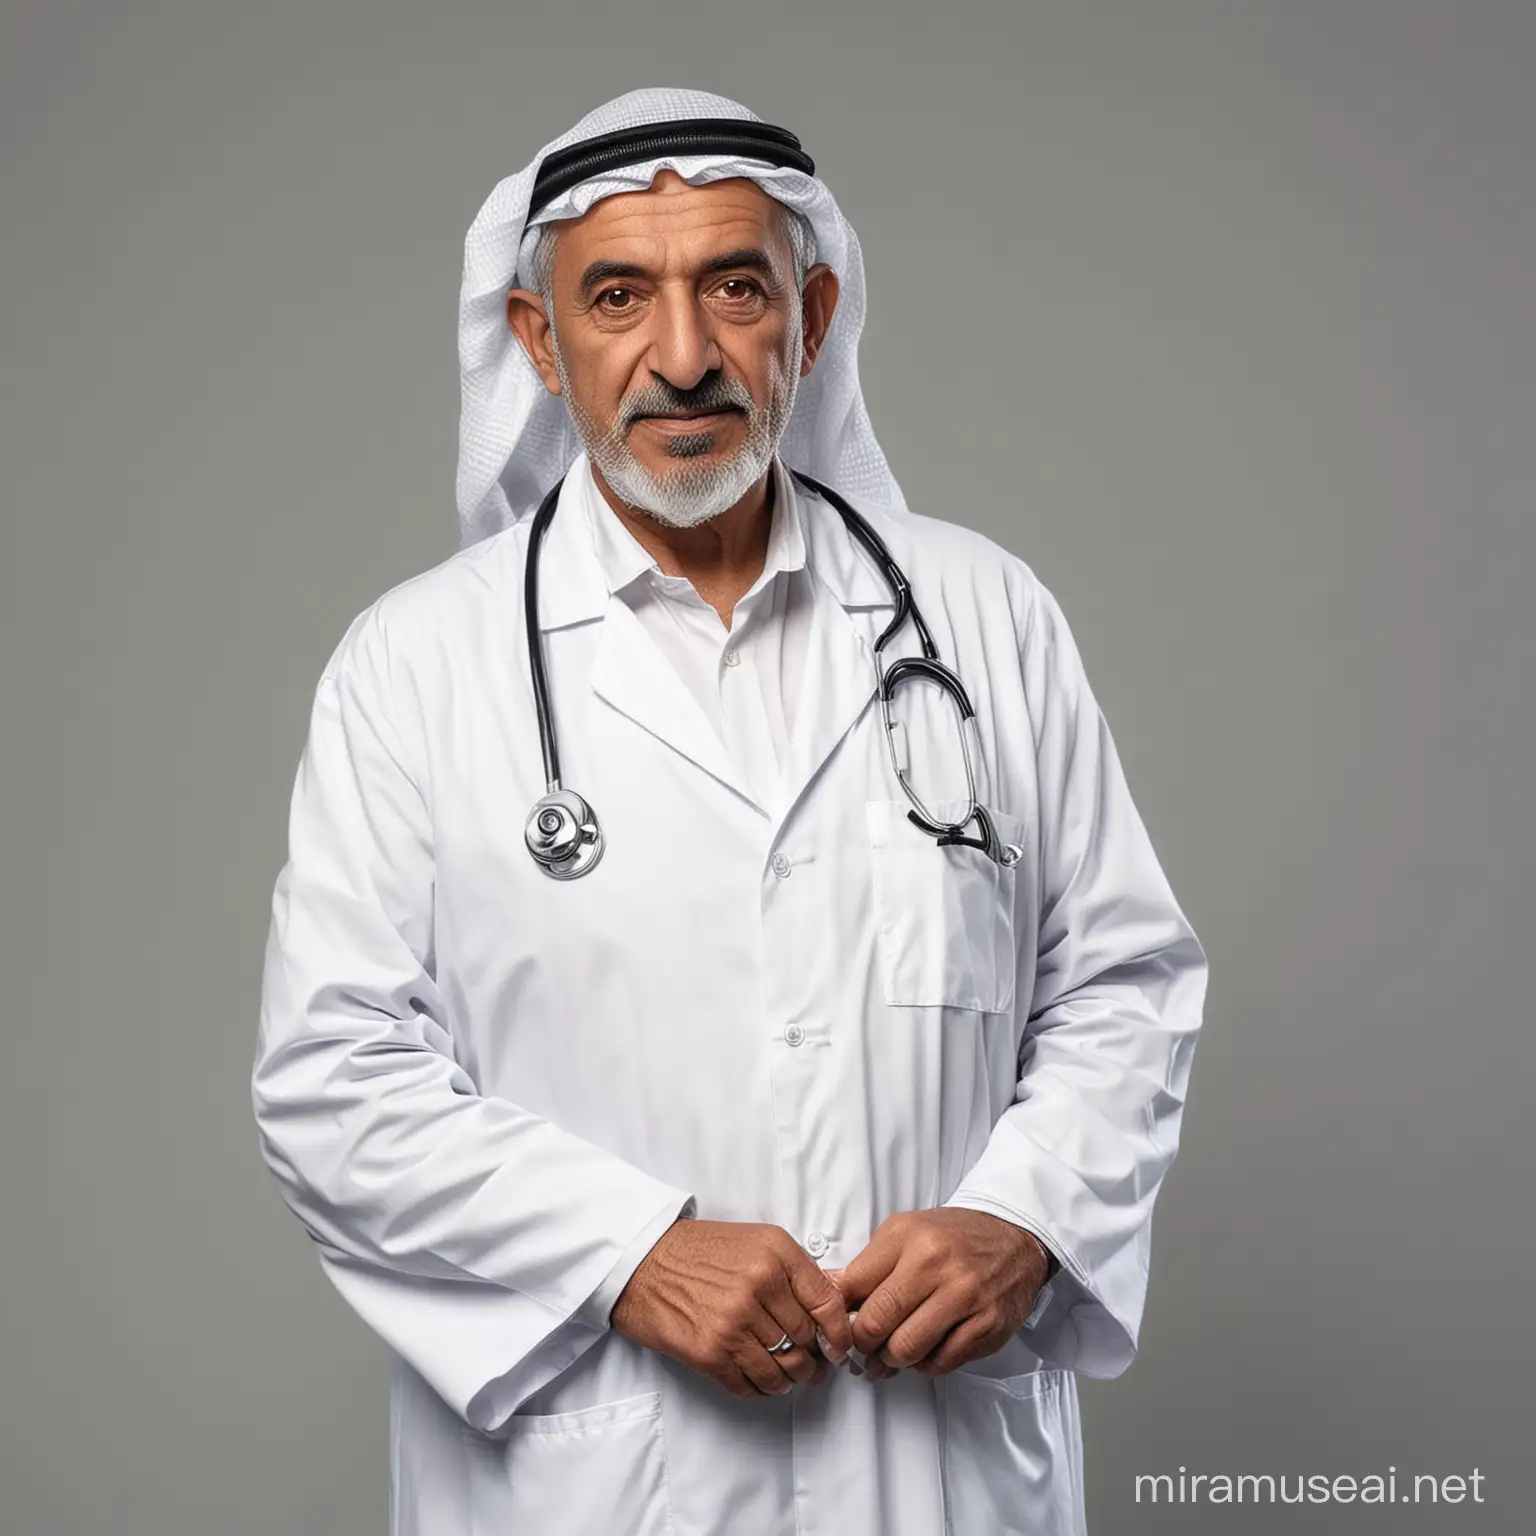 Elderly Arab Doctor Gazing Intently